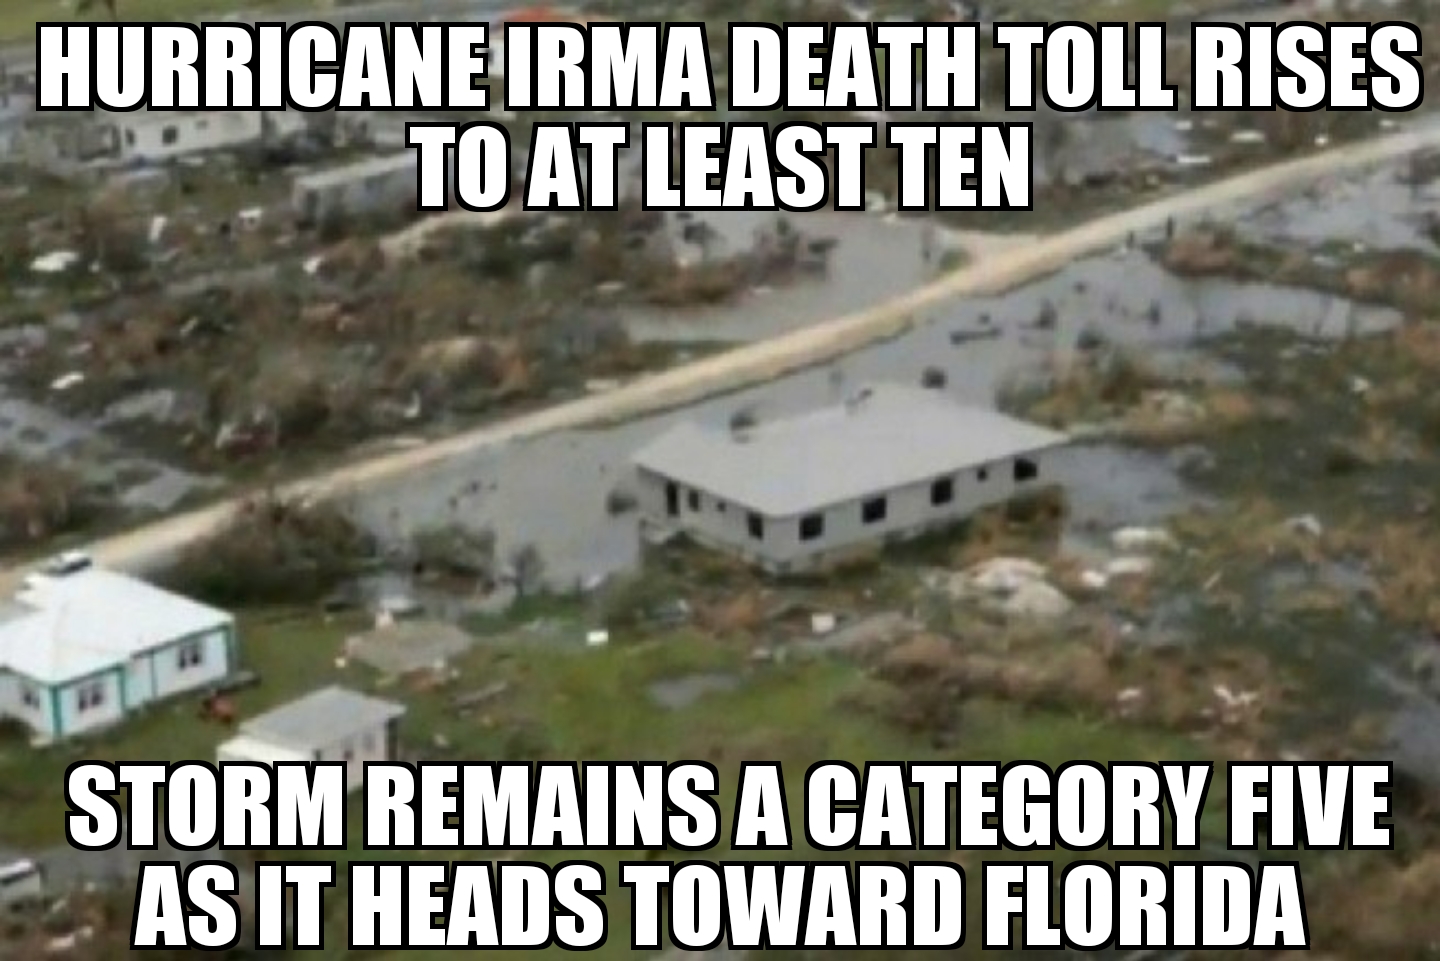 Hurricane Irma death toll at least 10